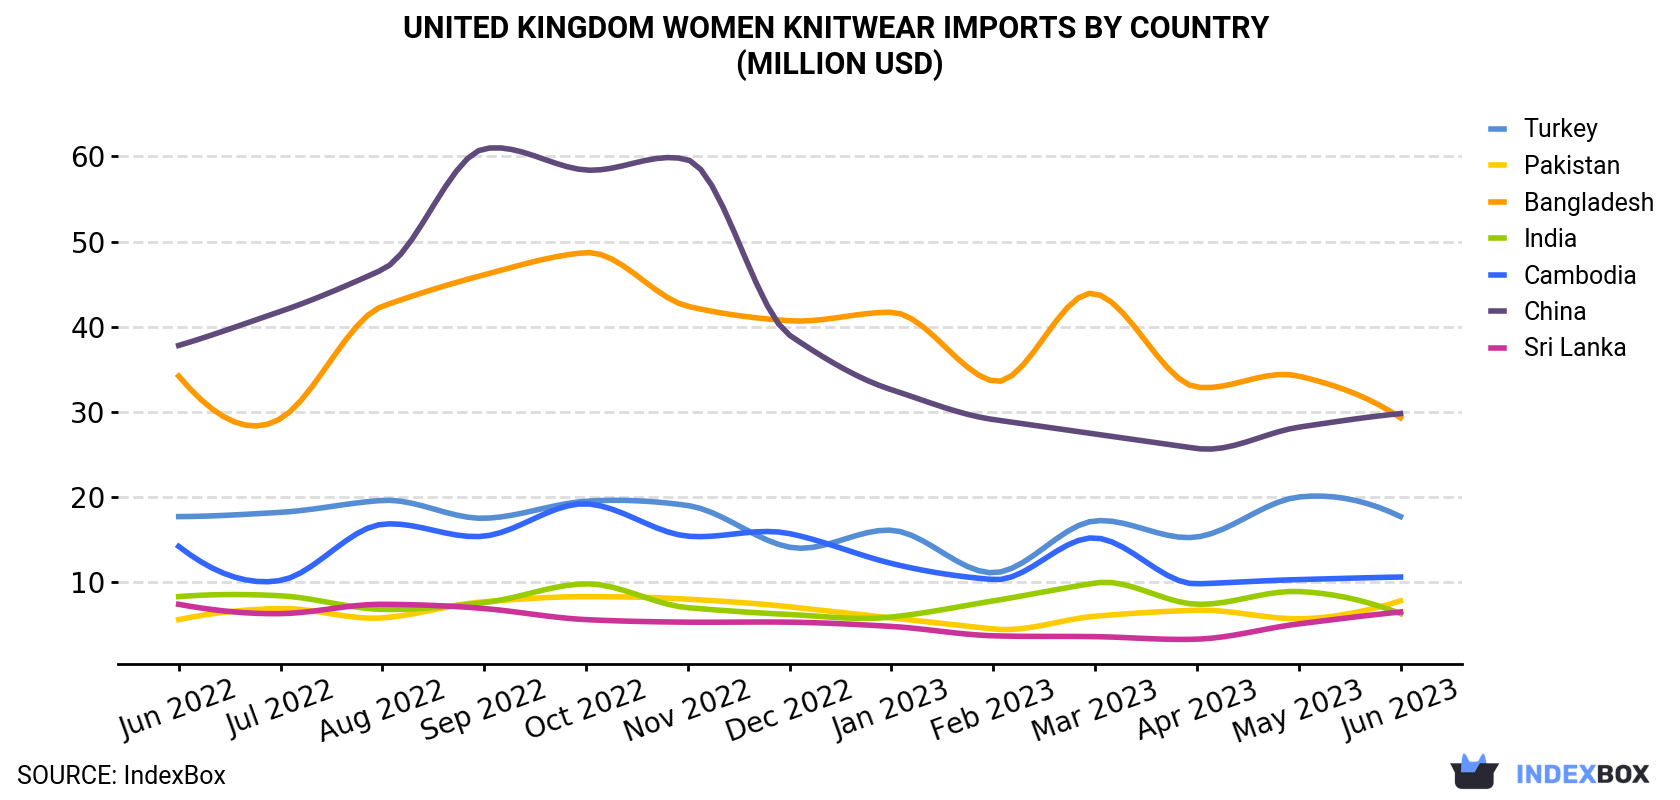 United Kingdom Women Knitwear Imports By Country (Million USD)